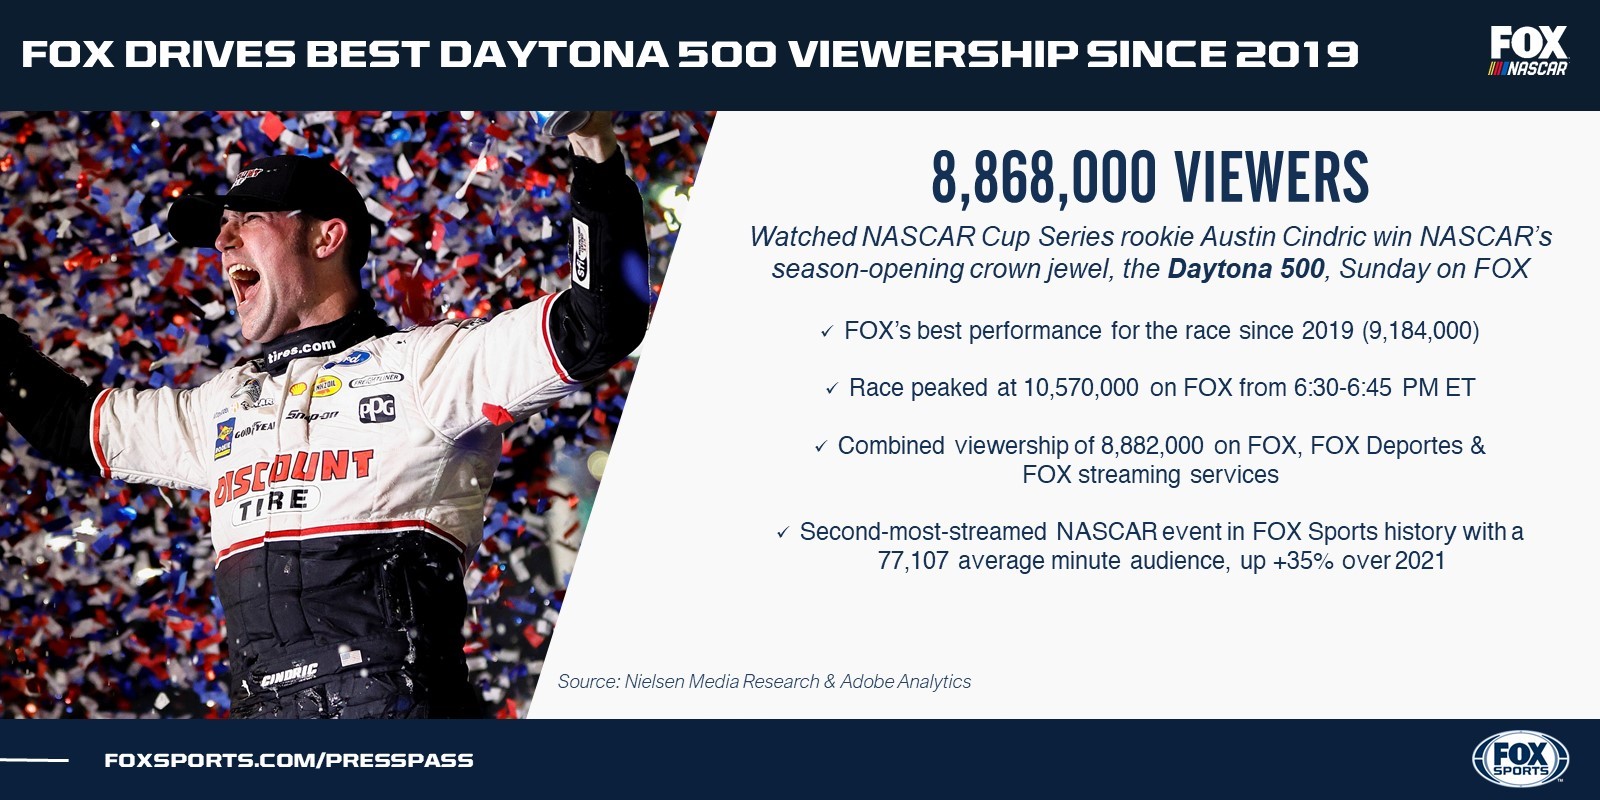 NASCAR Daytona 500 TV Rating up 35% despite Olympics